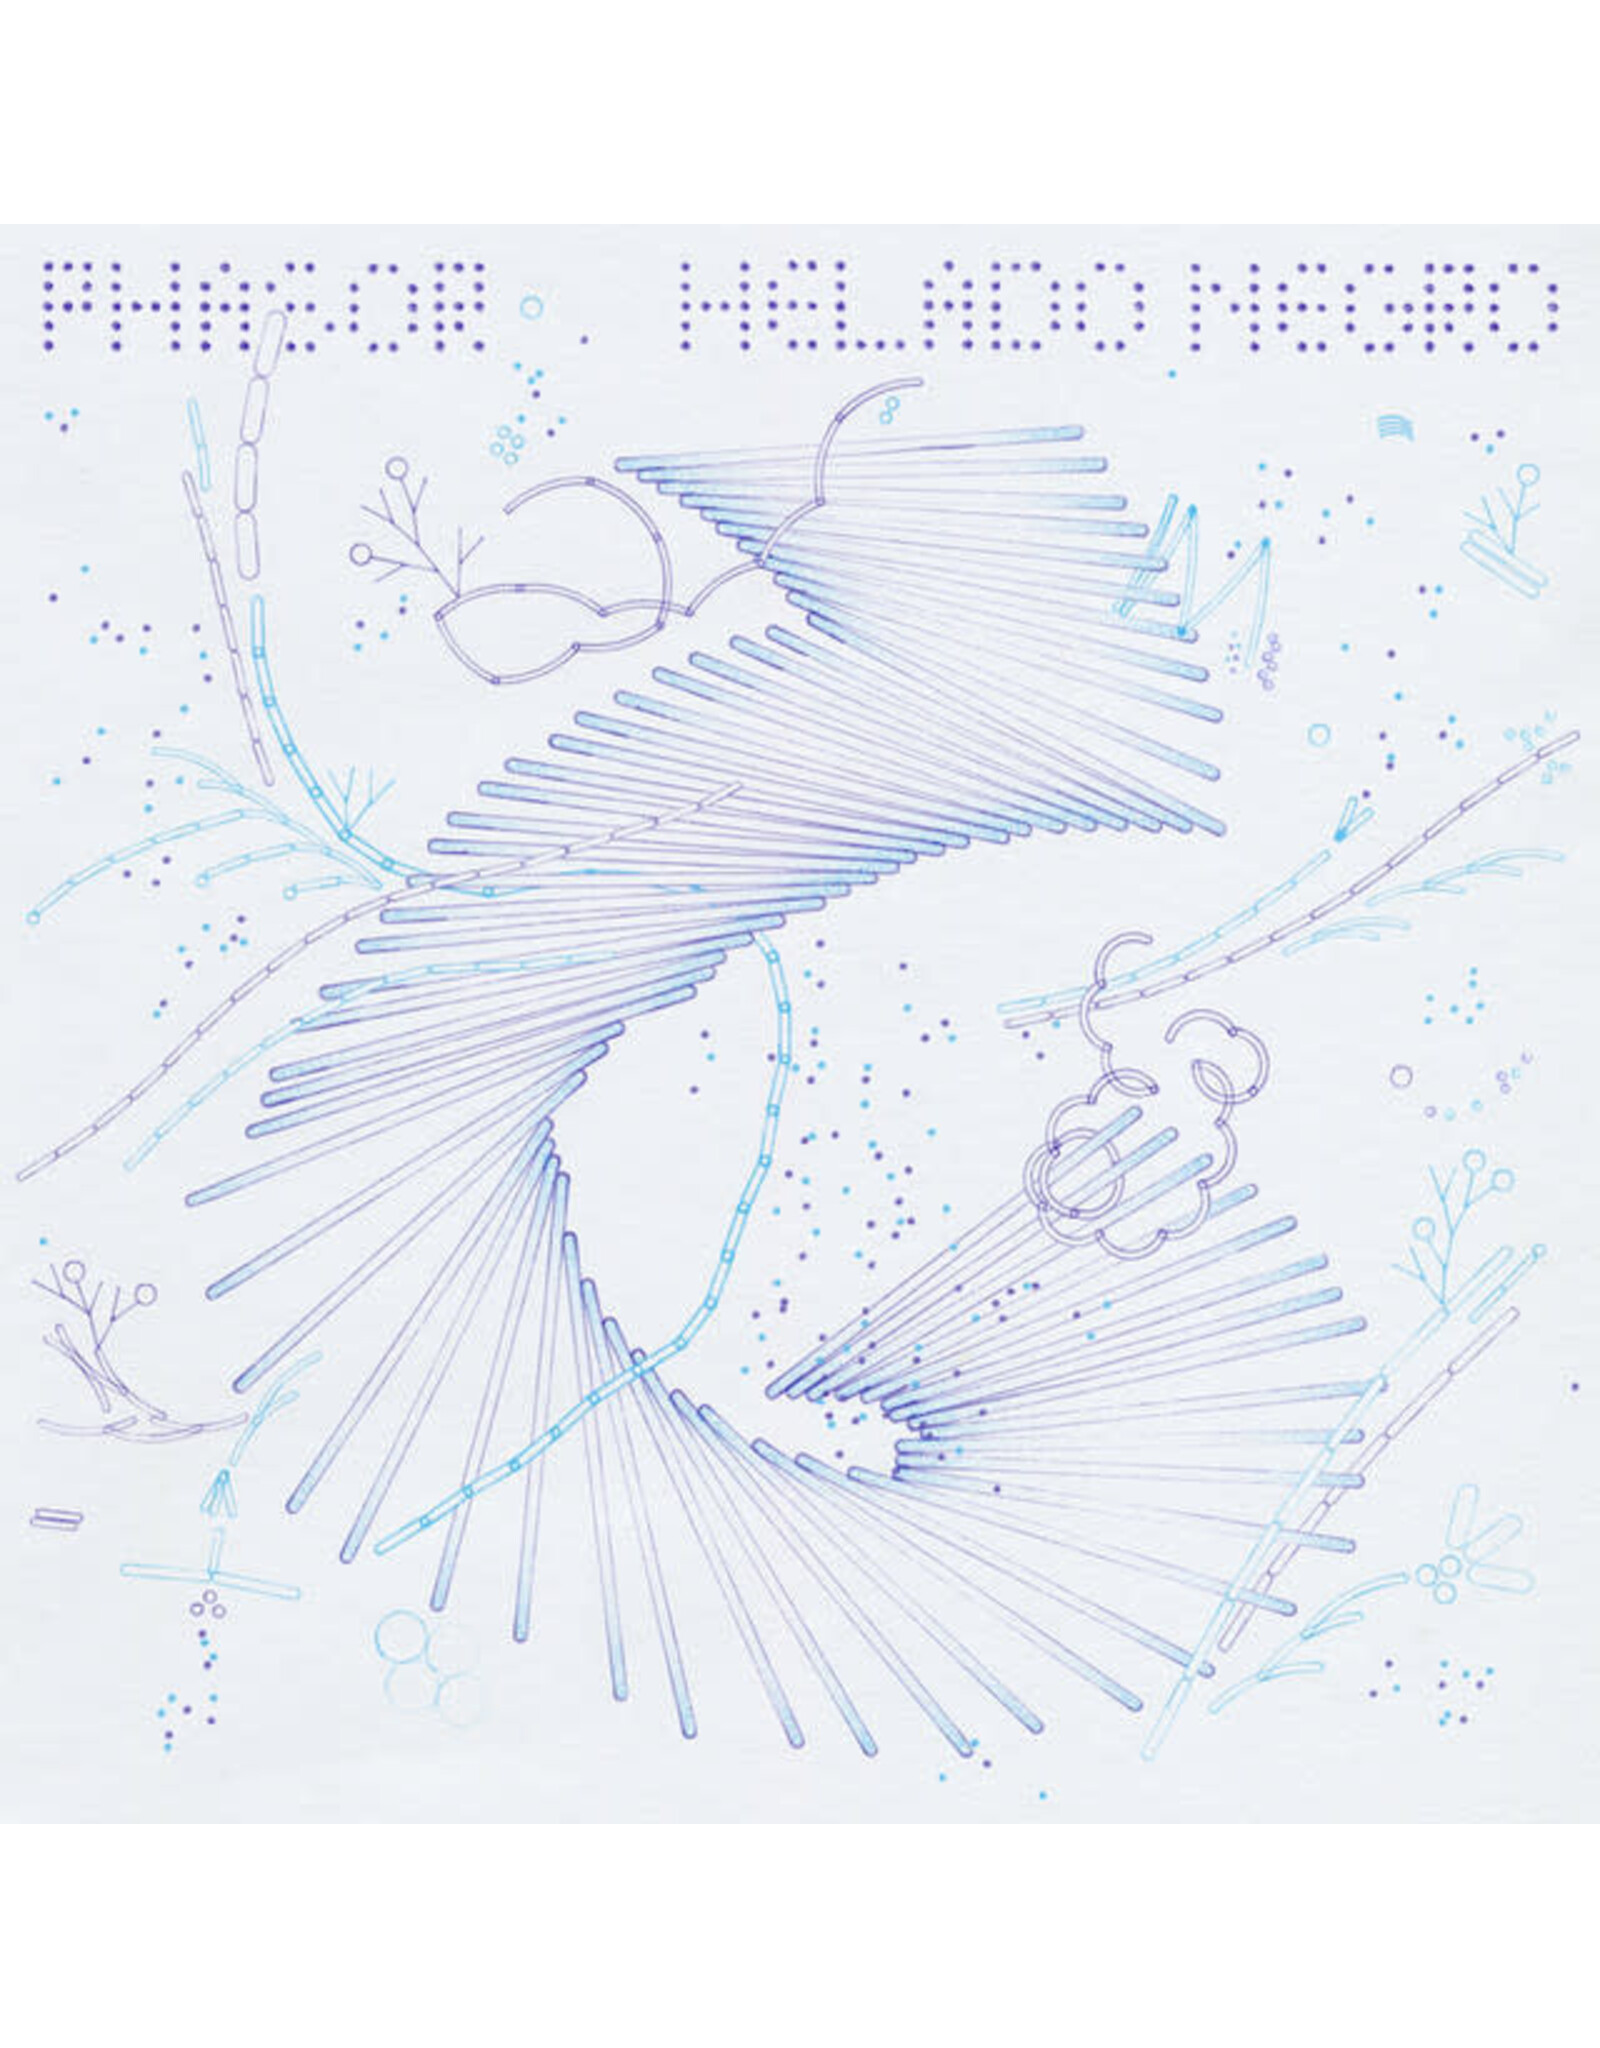 4AD Helado Negro: Phasor (coke bottle green/indie shop edition) LP